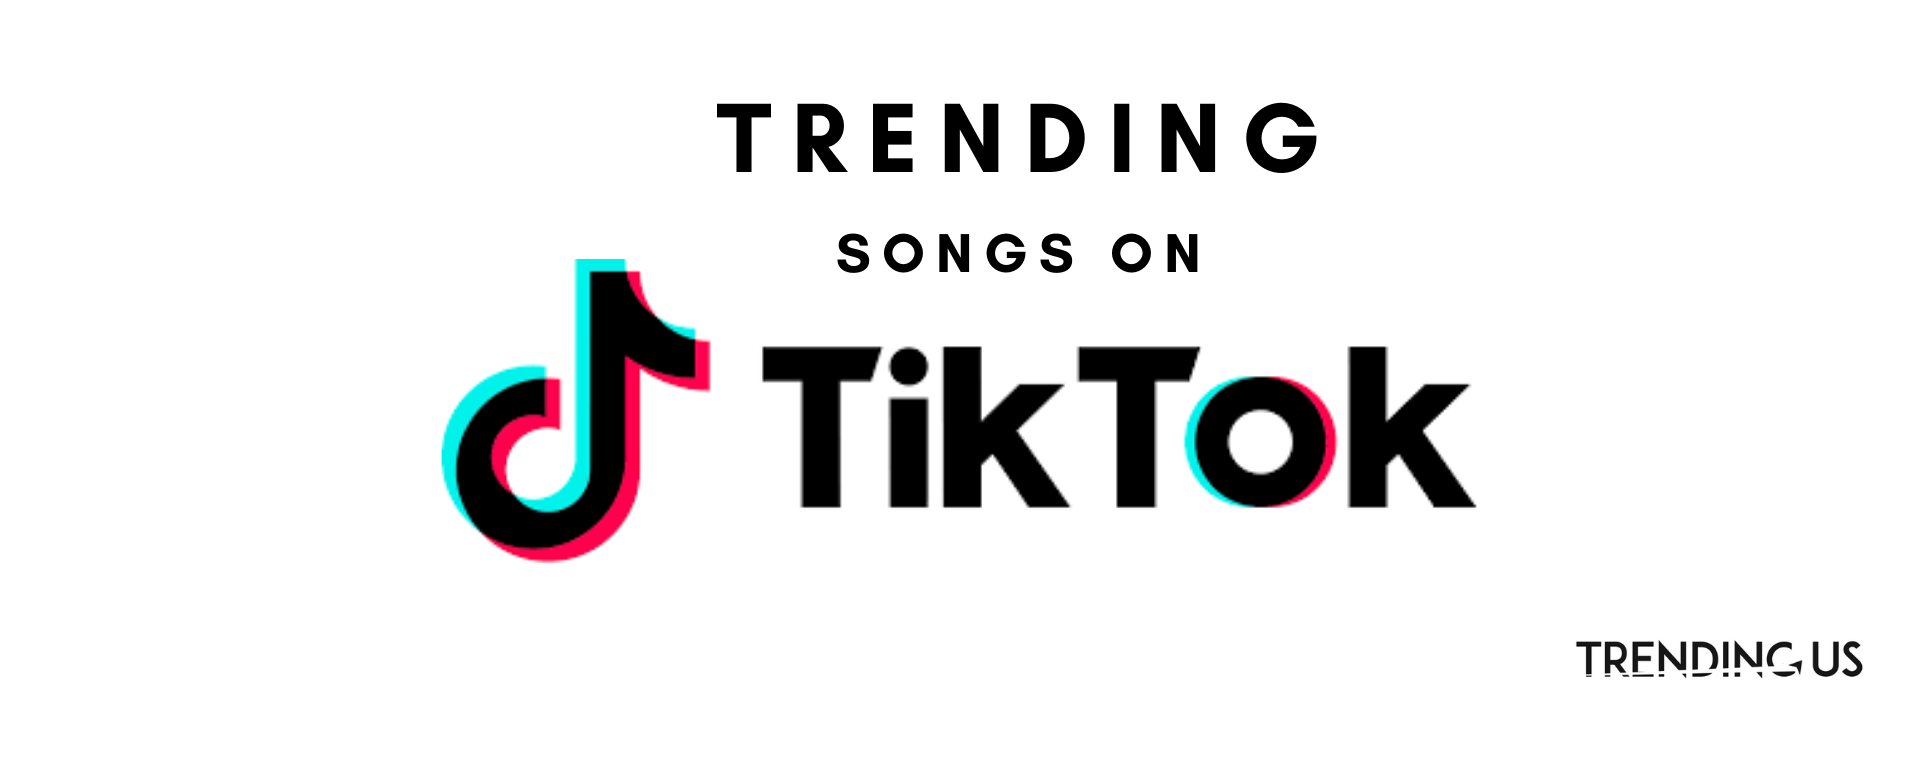 37 Trending TikTok Songs in India Today - 2020 » Trending Us